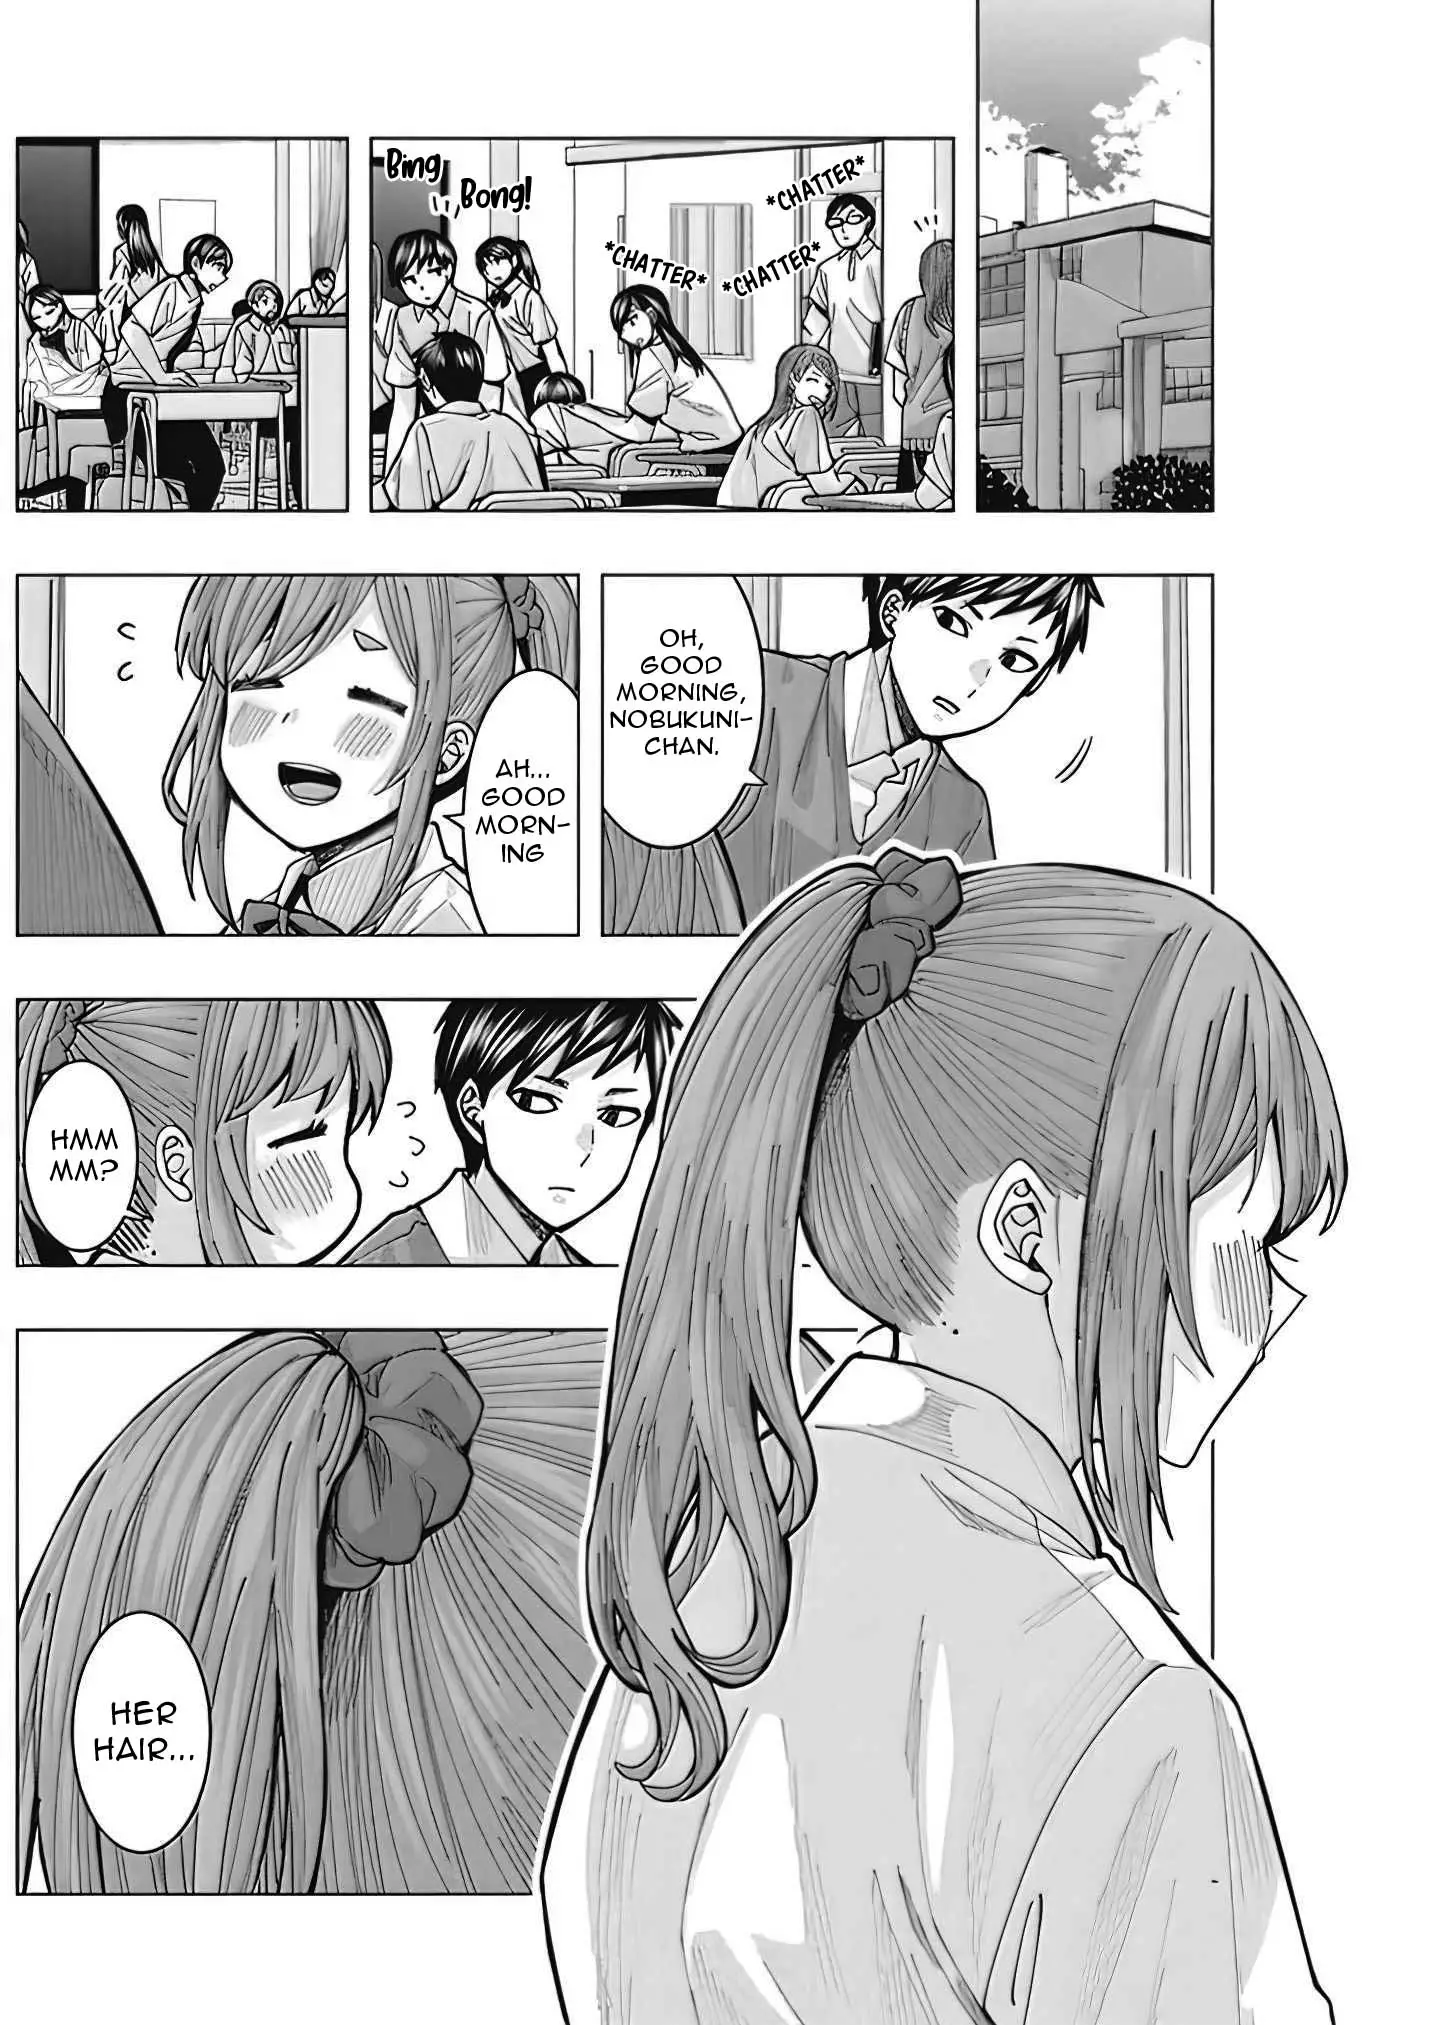 "nobukuni-San" Does She Like Me? - 3 page 3